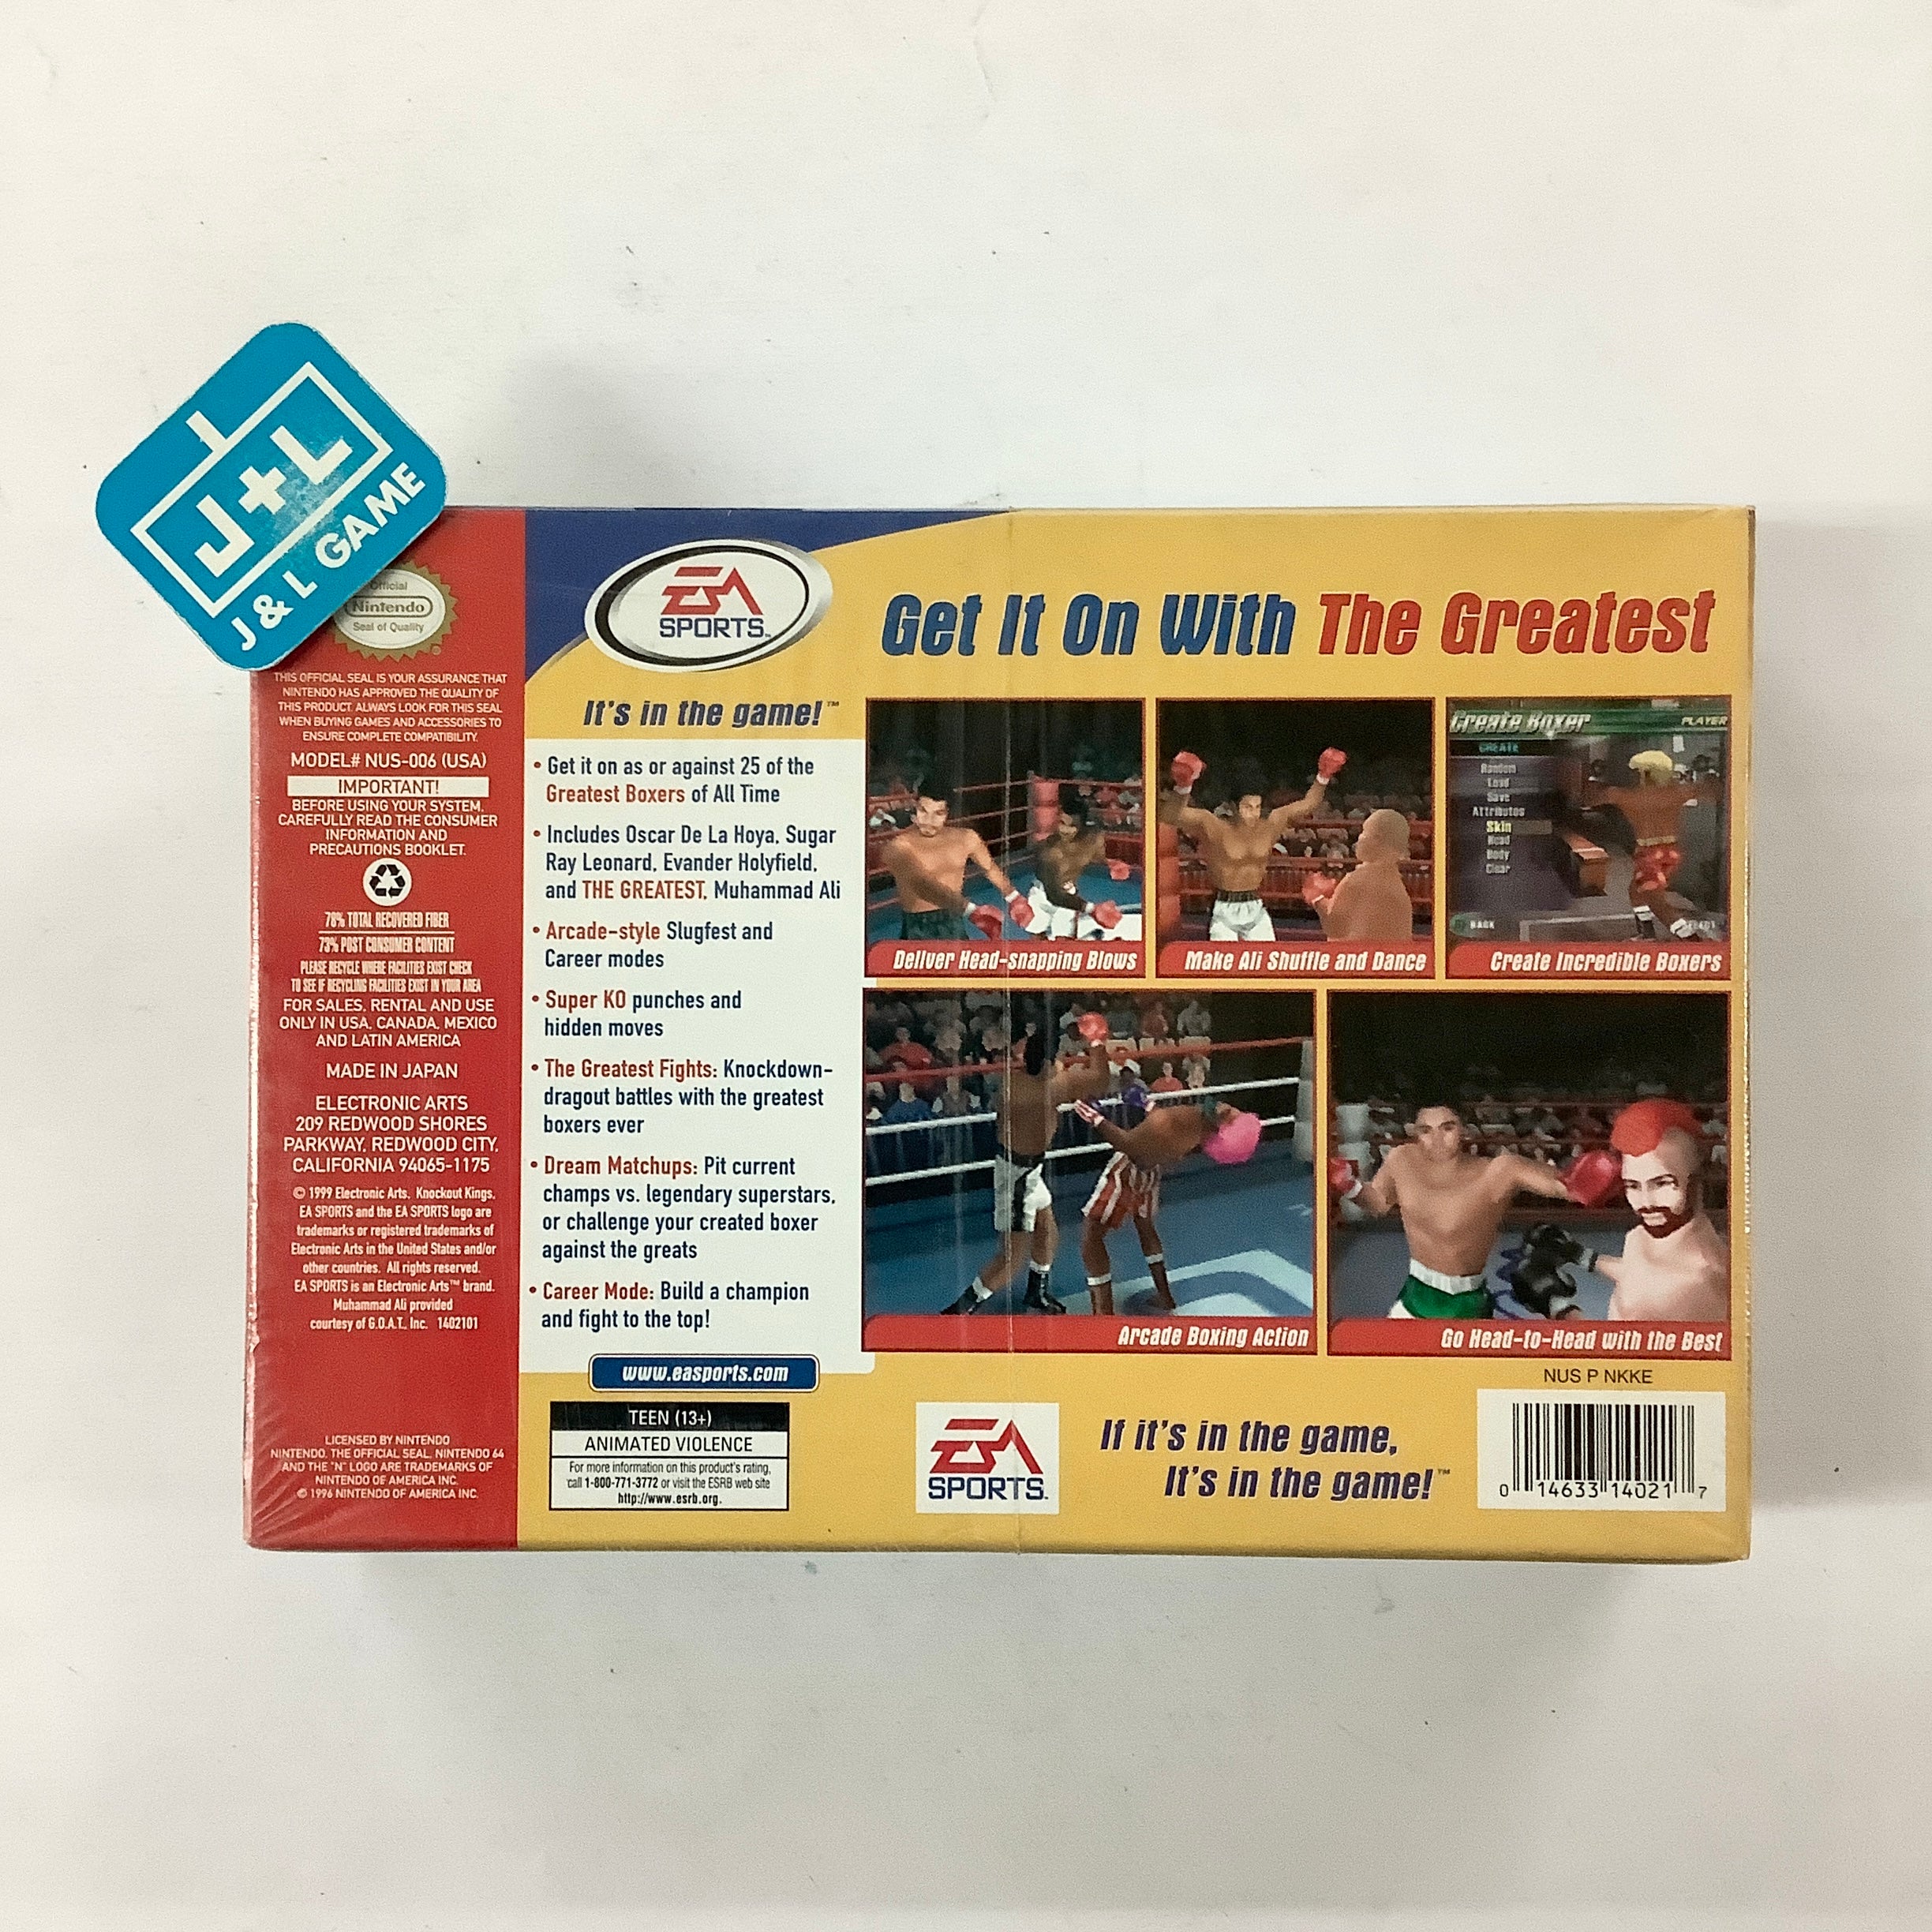 Knockout Kings 2000 - (N64) Nintendo 64 Video Games EA Sports   